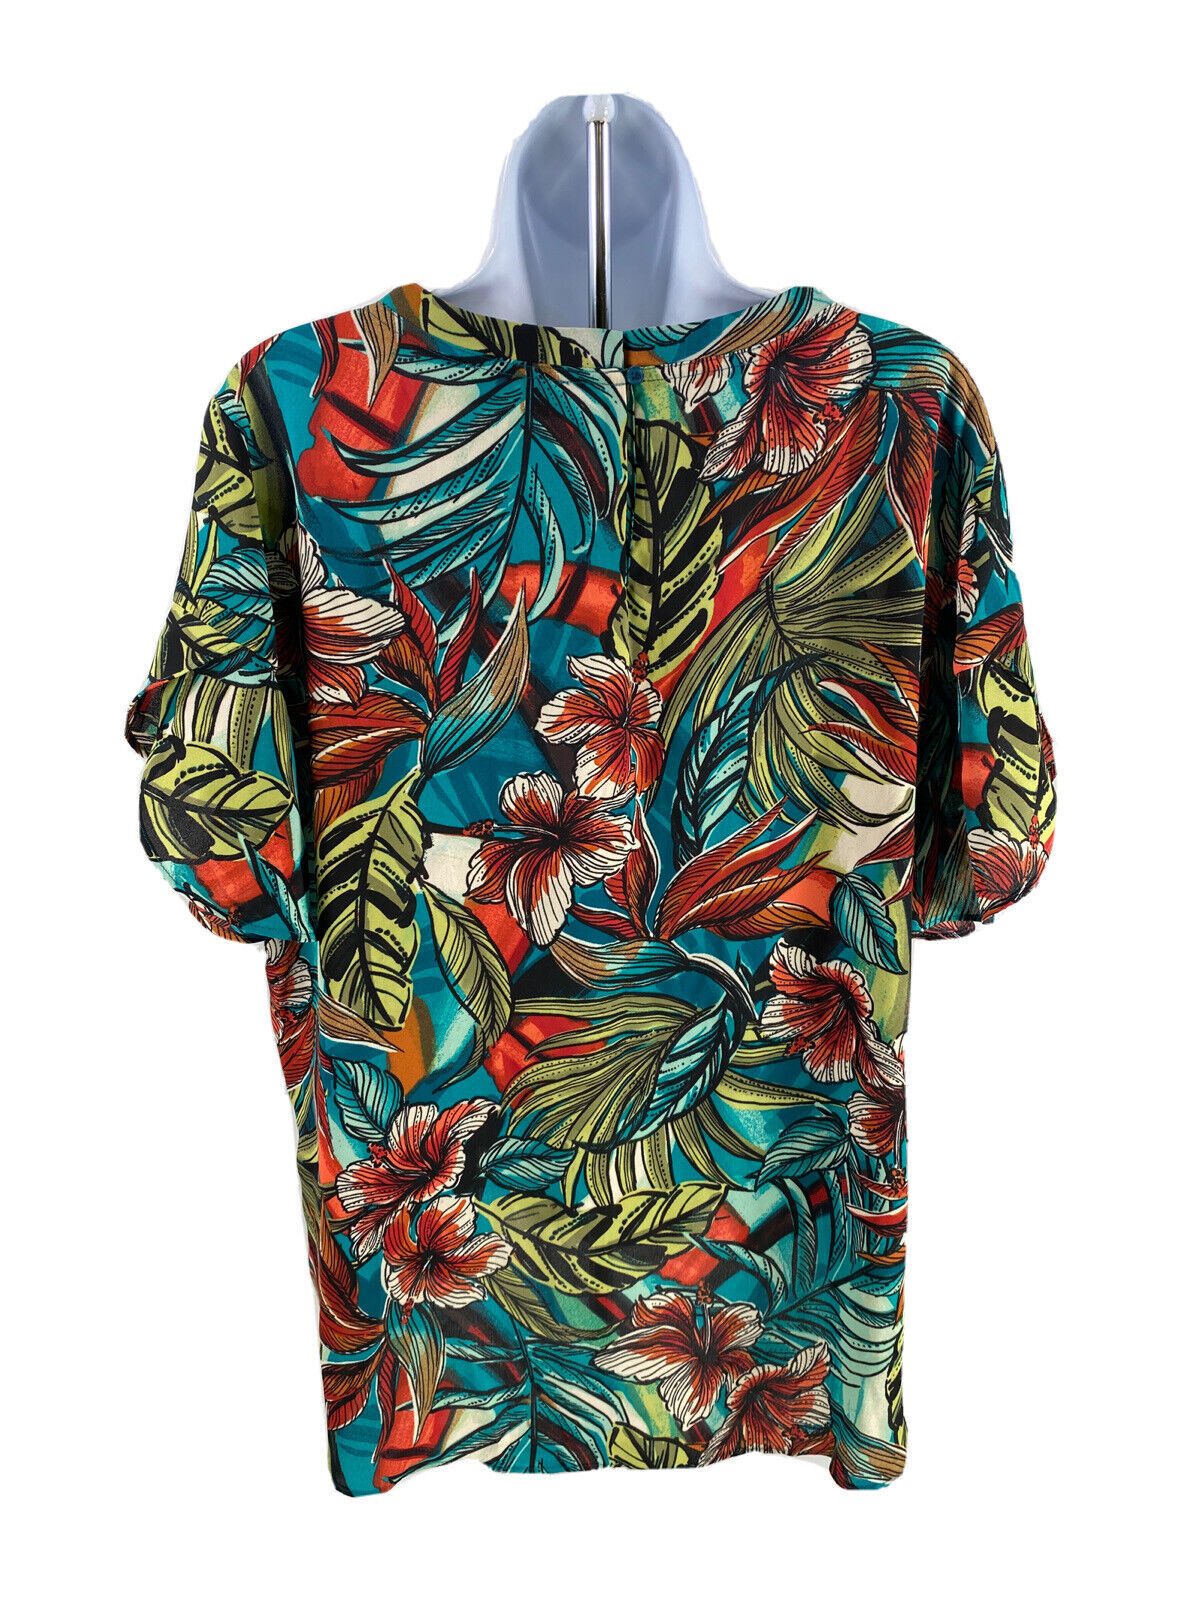 NEW LOFT Women's Multi-Color Short Sleeve Leaf Print Sheer Blouse - L